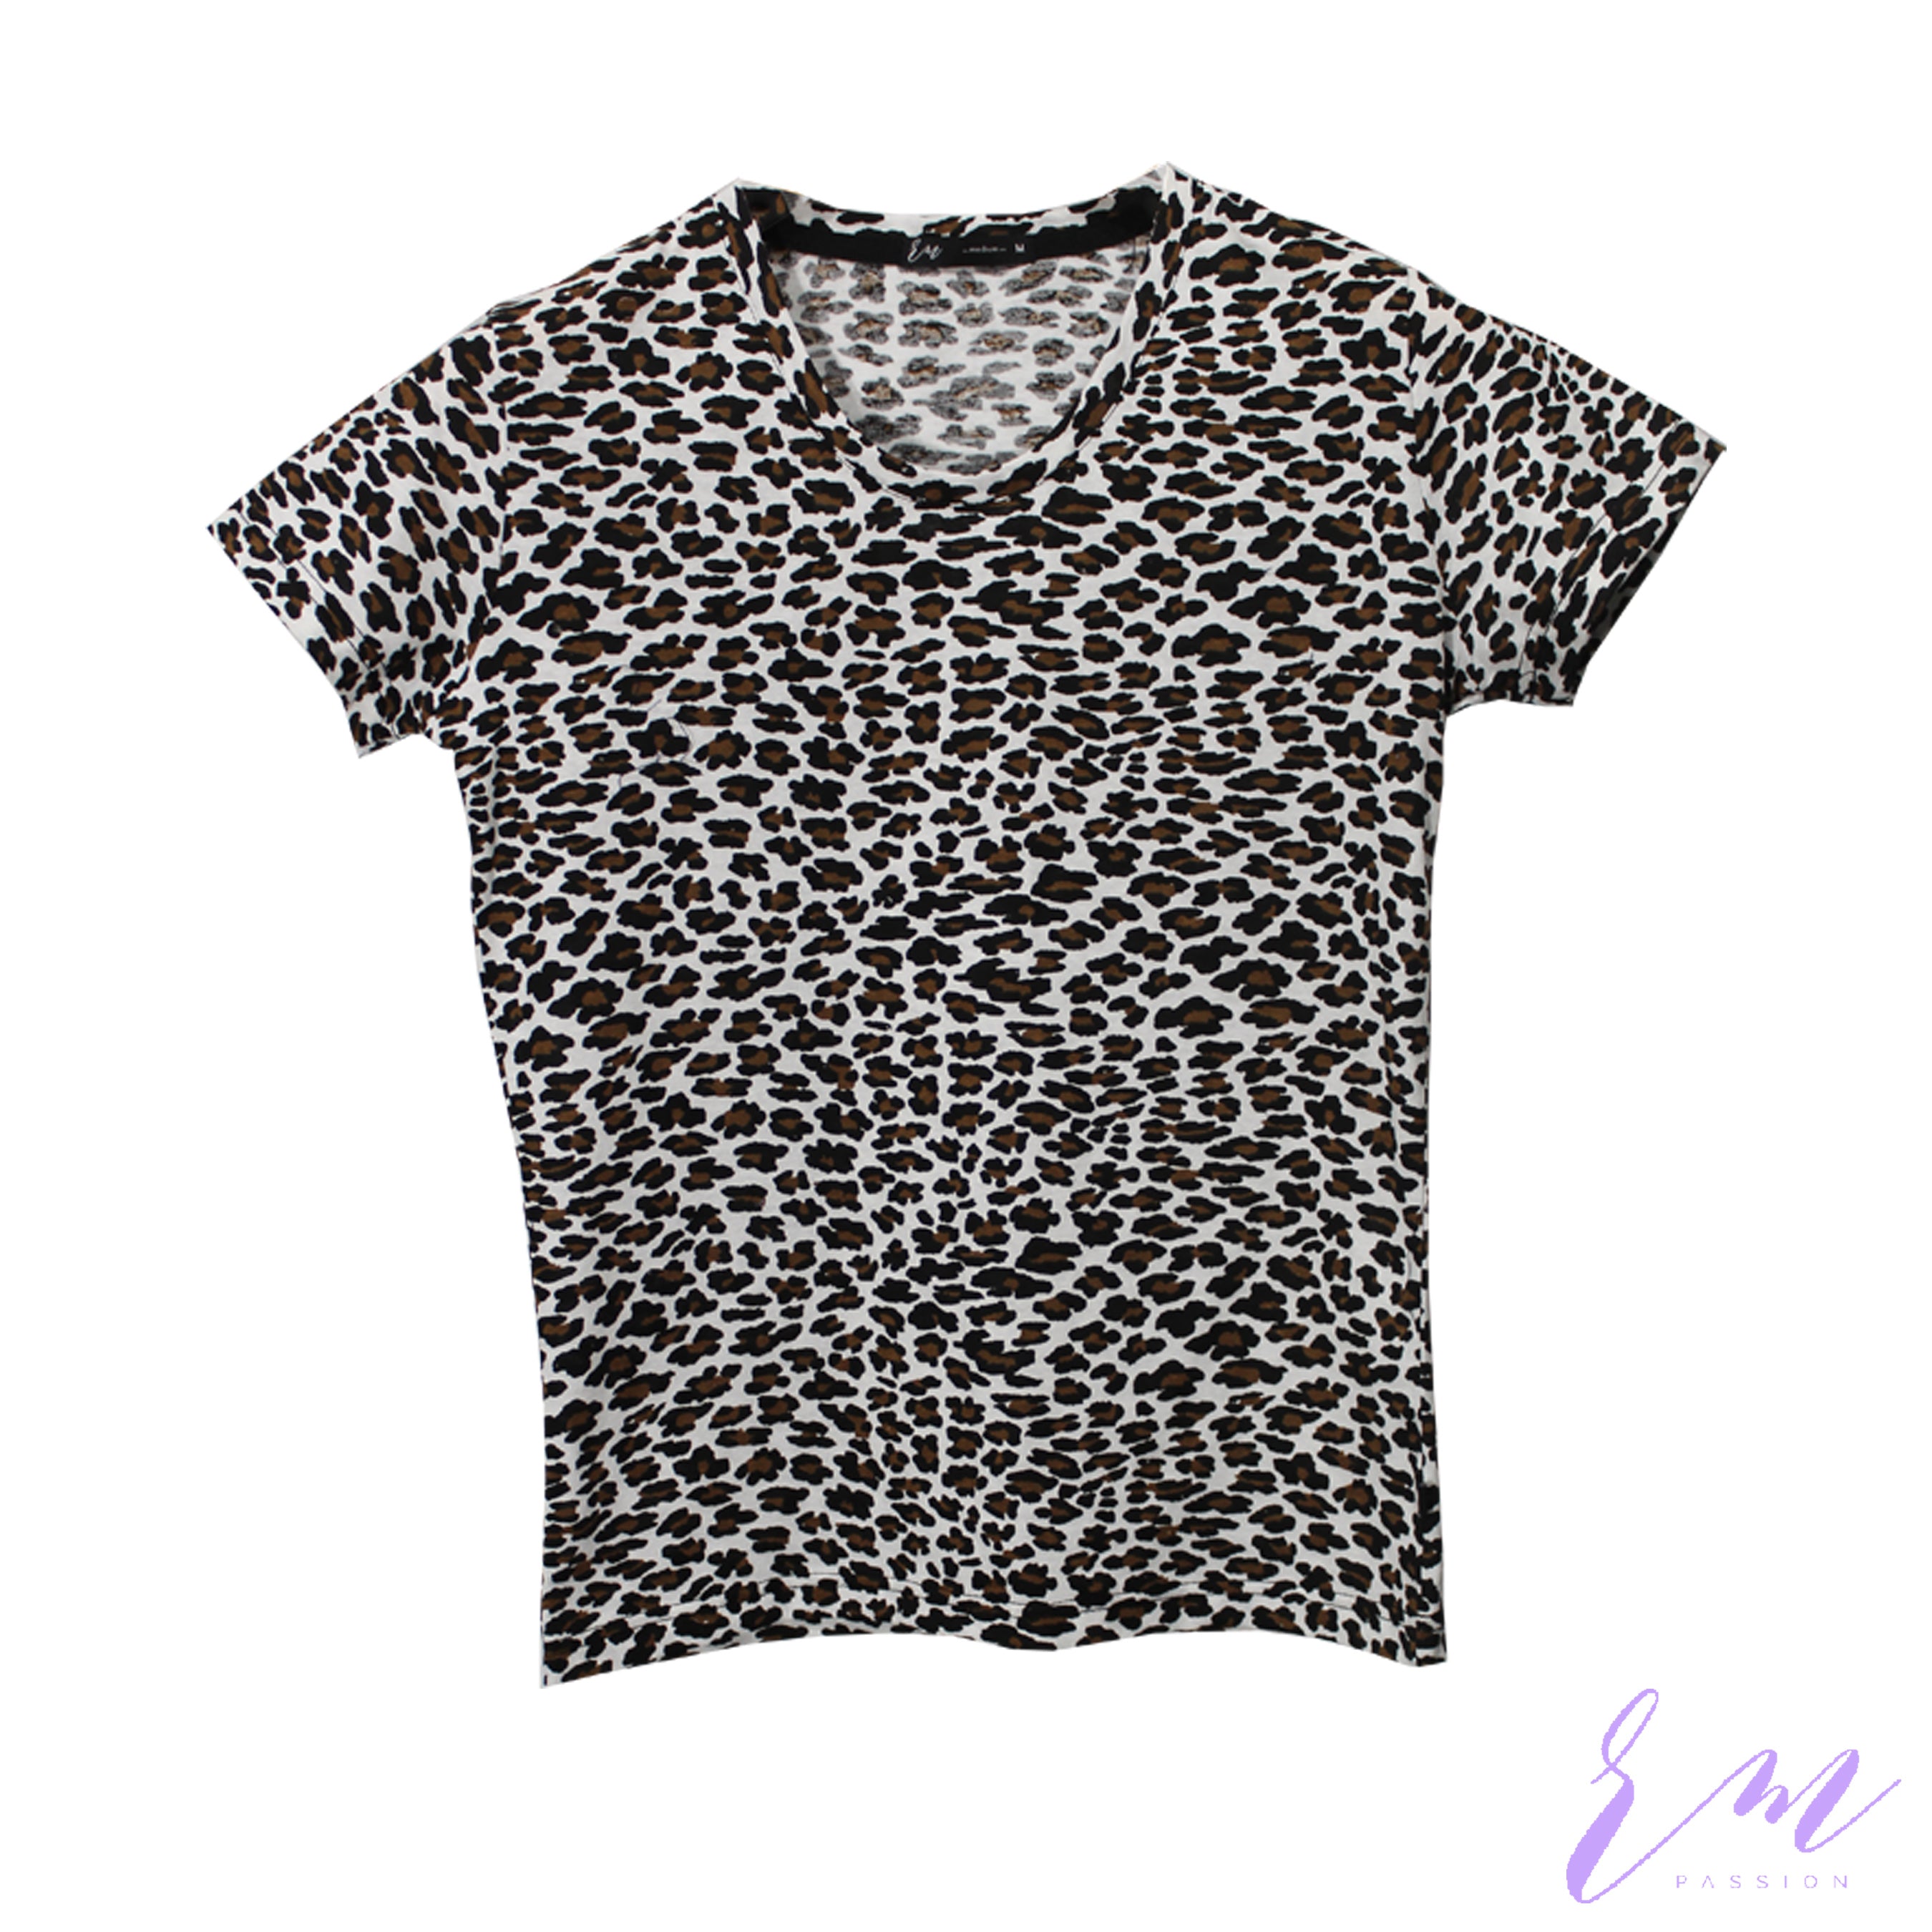 Cheeta top 02